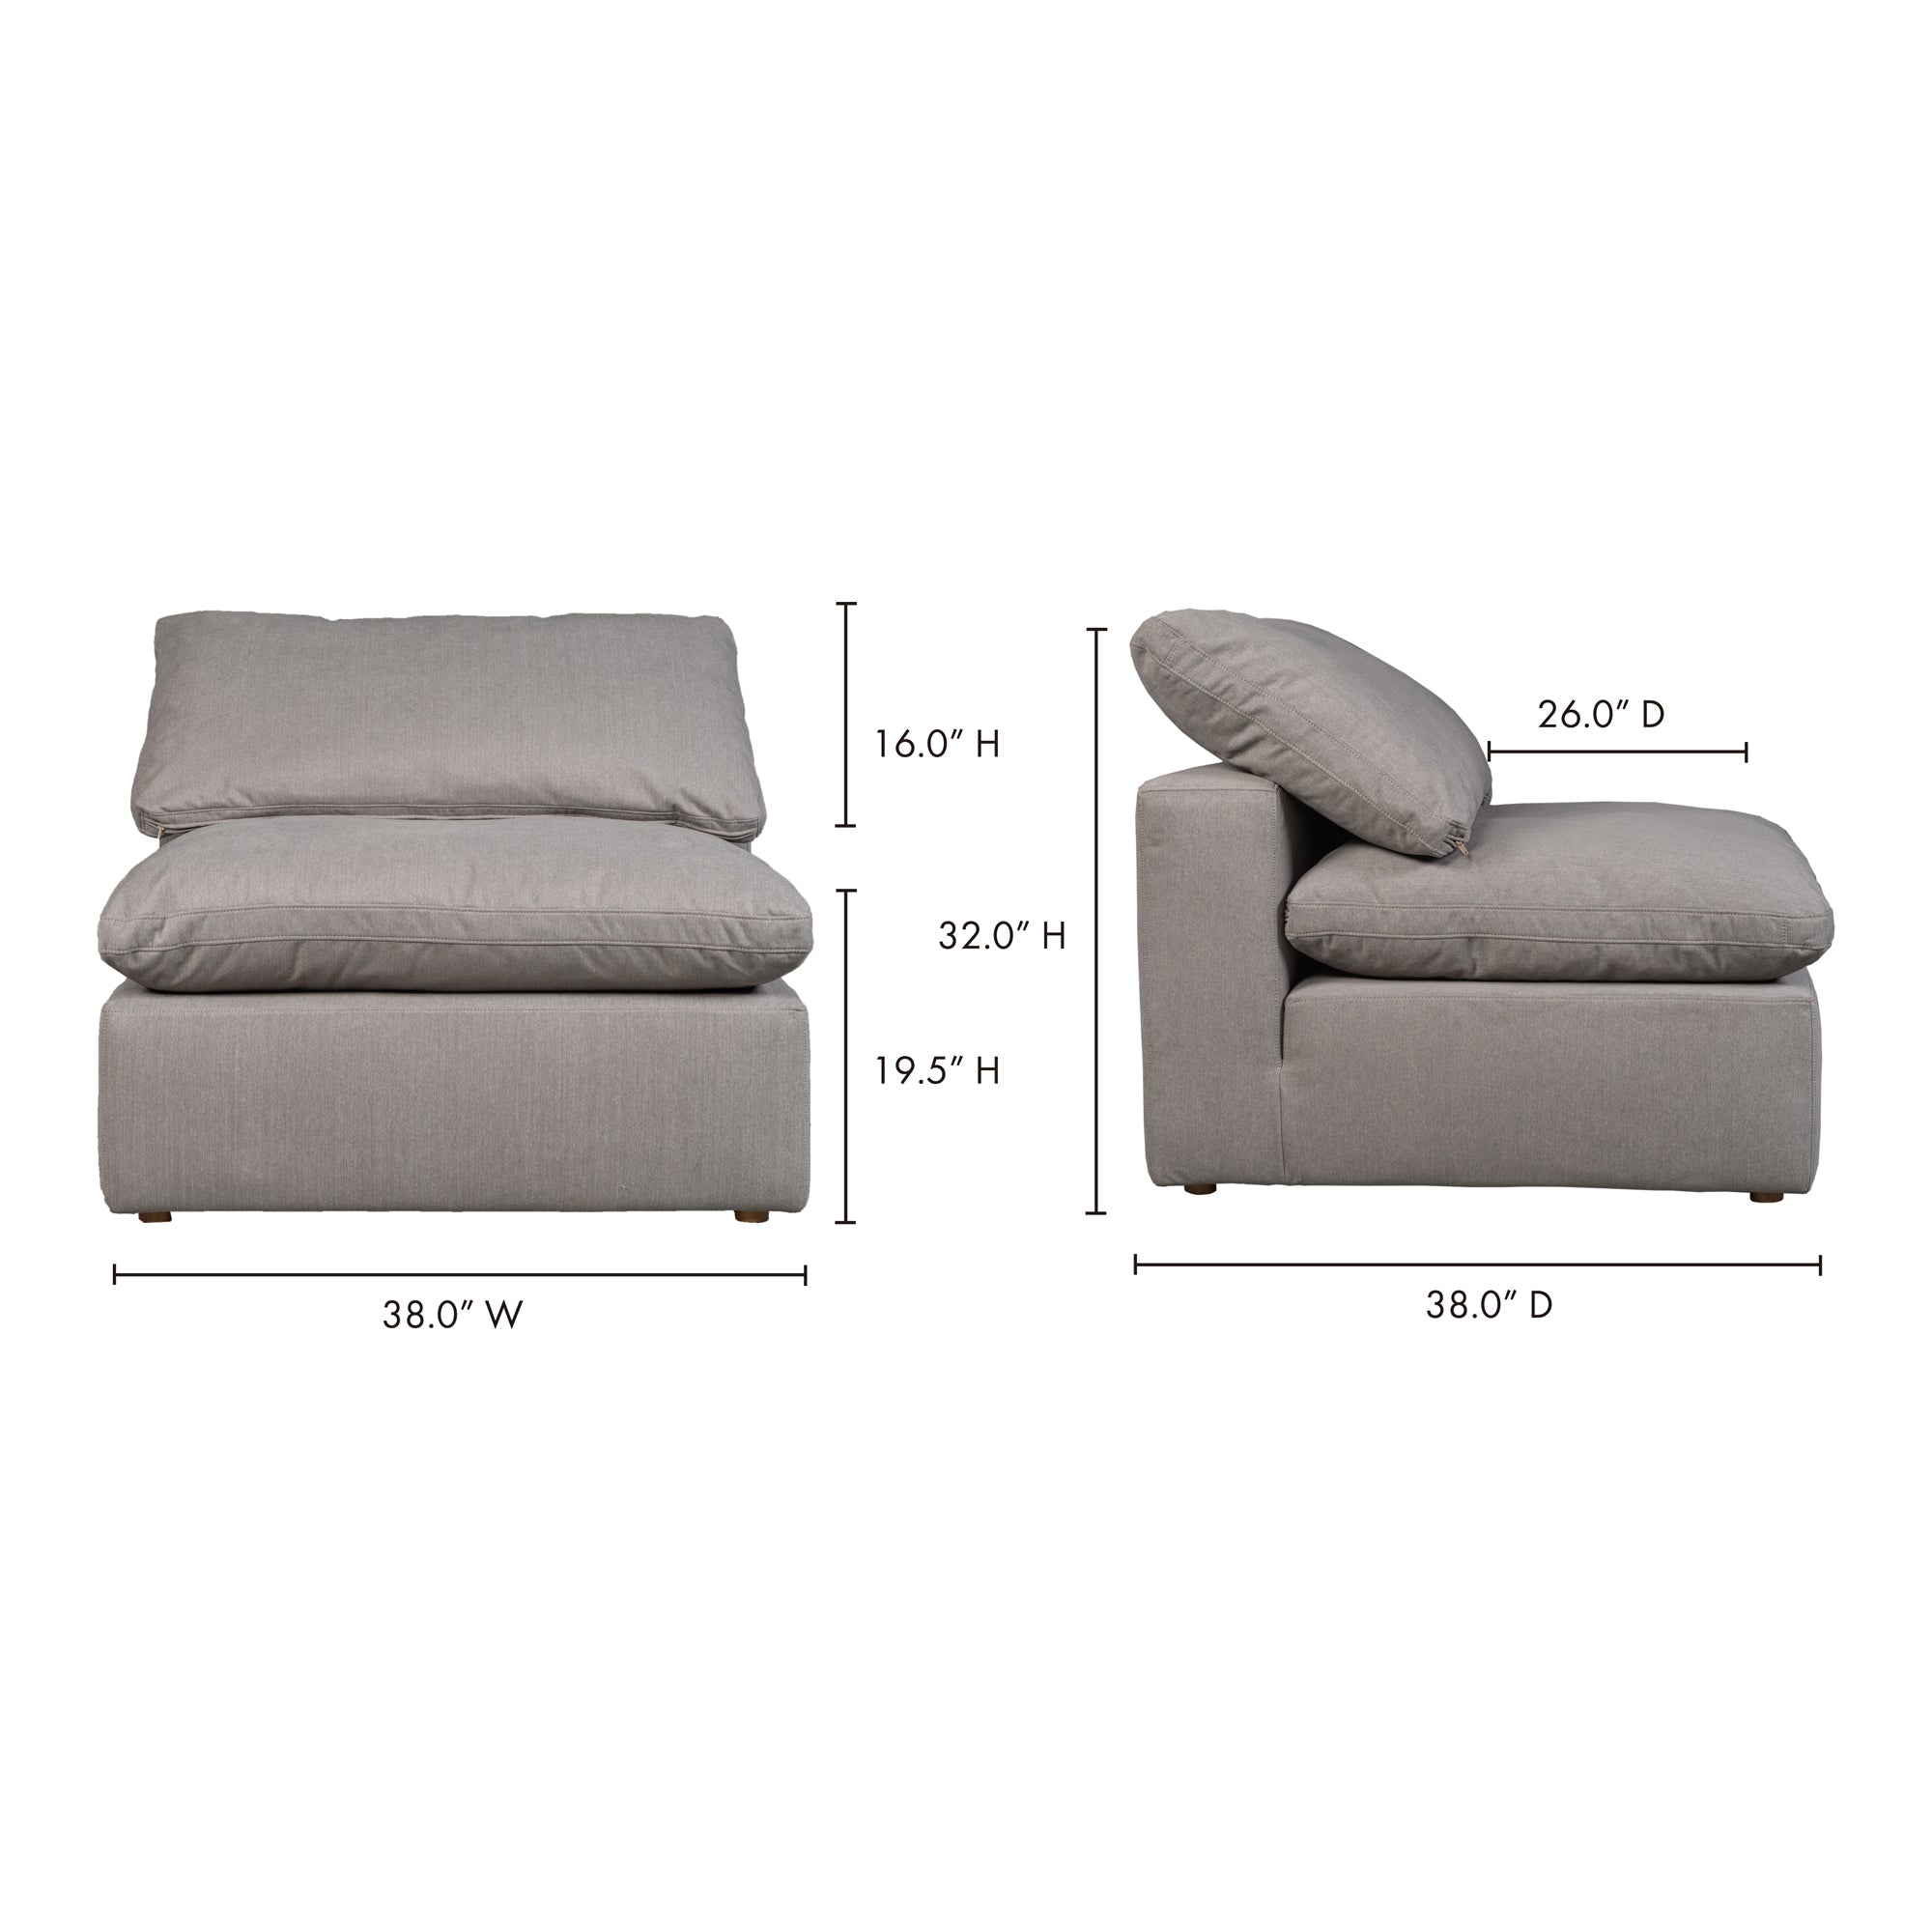 Terra Condo Slipper Chair Livesmart Fabric - Grey - - Furniture - Tipplergoods